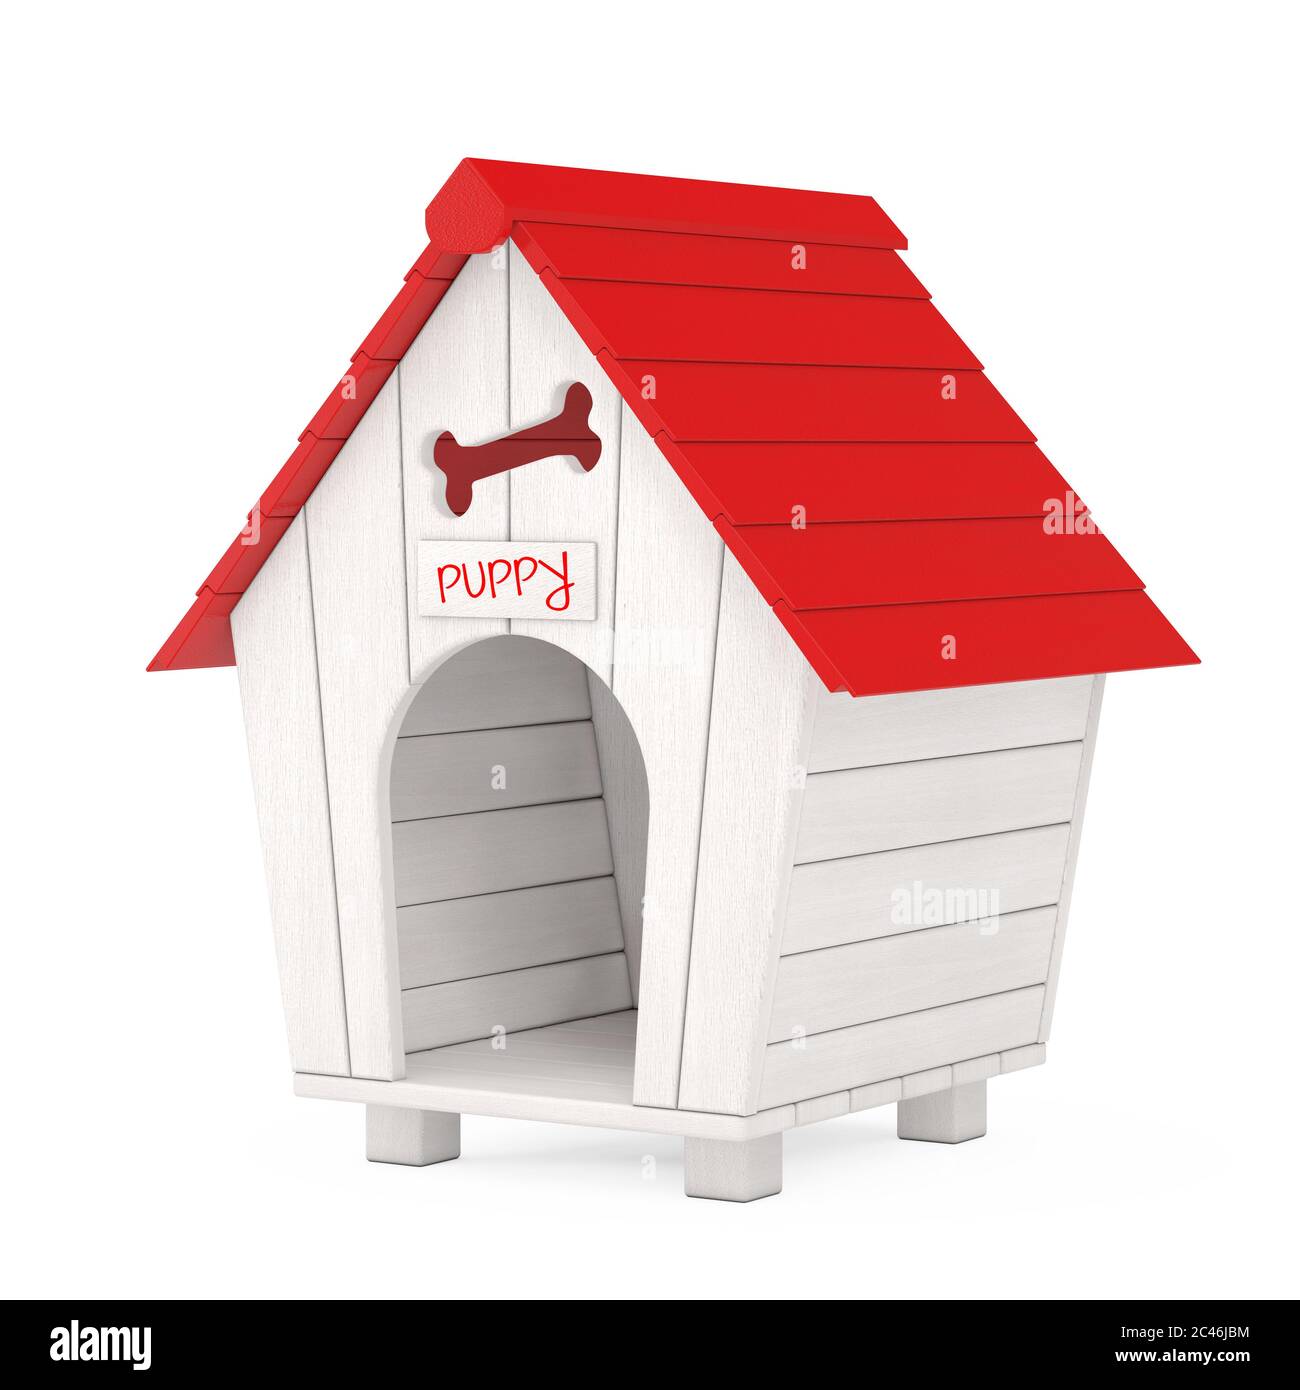  Lunarable Casa para perros de madera de hongos, diseño de  dibujos animados de estilo minimalista, patrón repetitivo de impresión  simétrica de motivos, perrera portátil para perros para exteriores e  interiores con